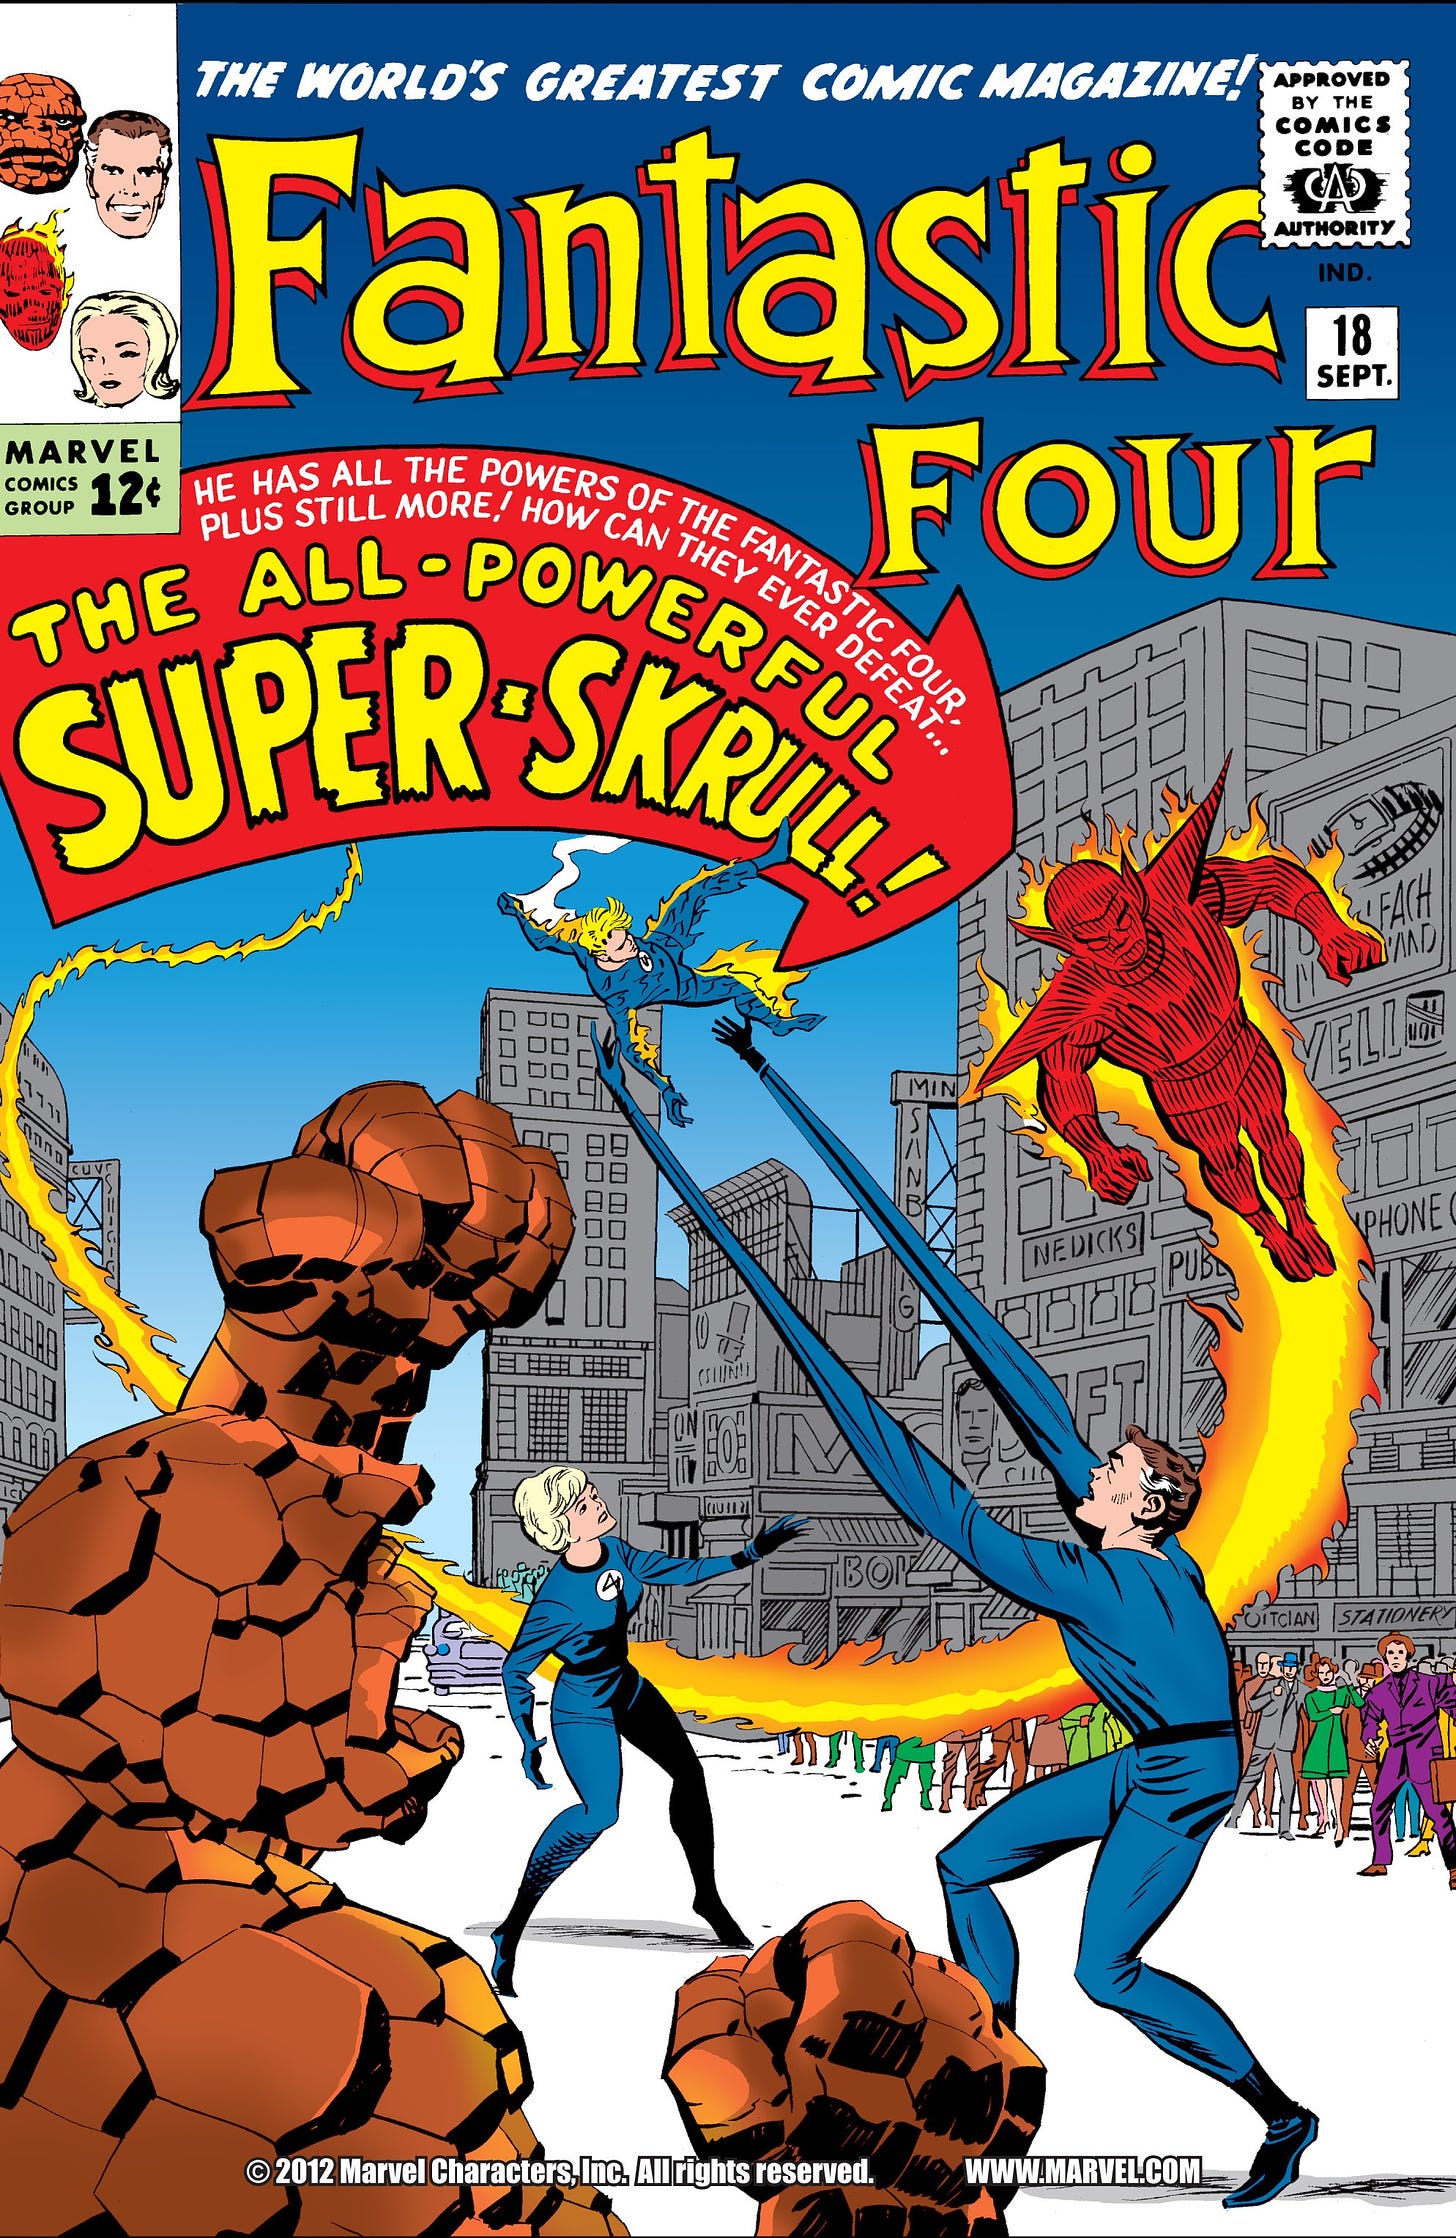 Fantastic Four Vol 1 18 | Marvel Database | Fandom